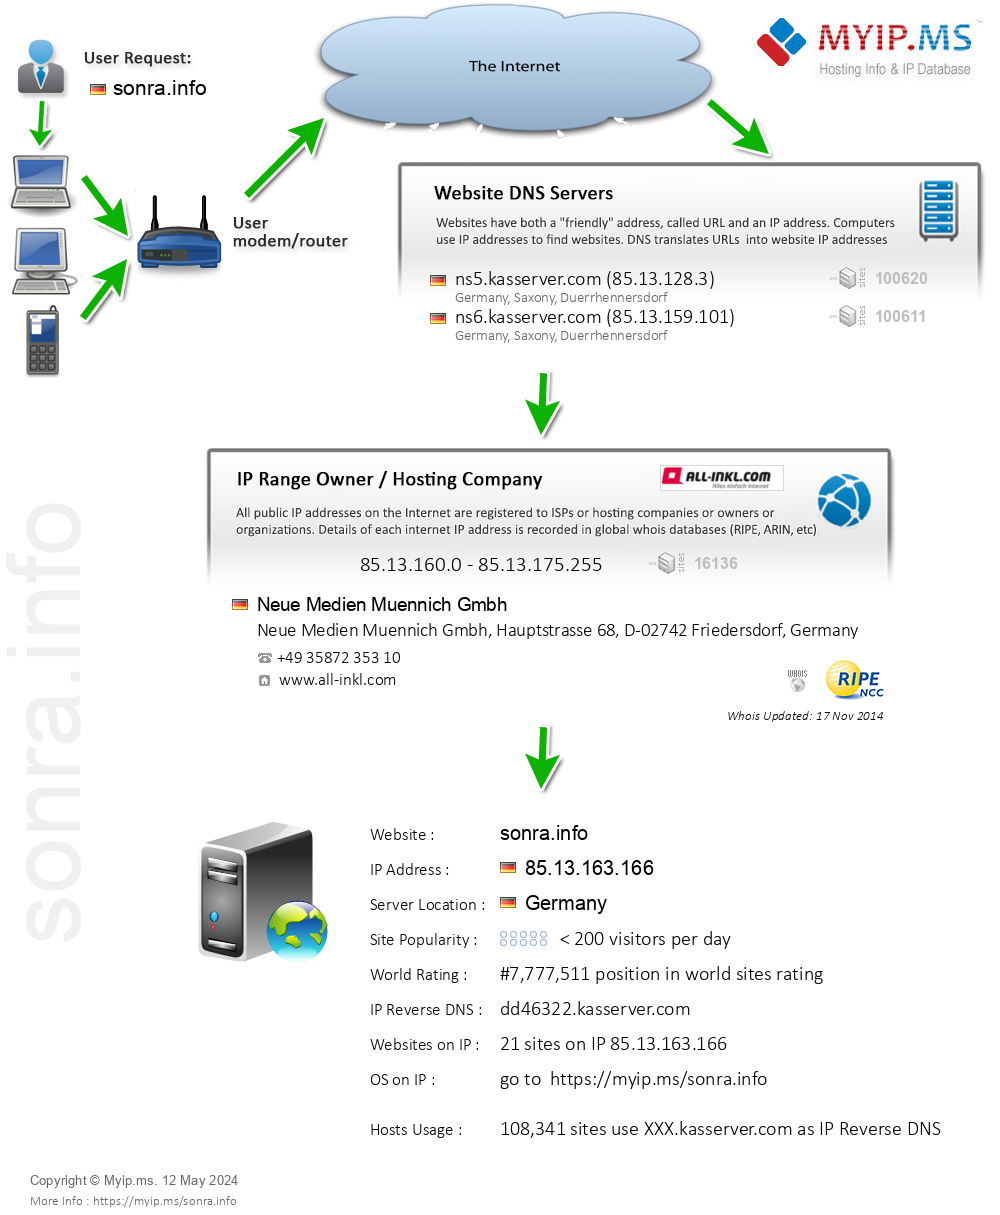 Sonra.info - Website Hosting Visual IP Diagram